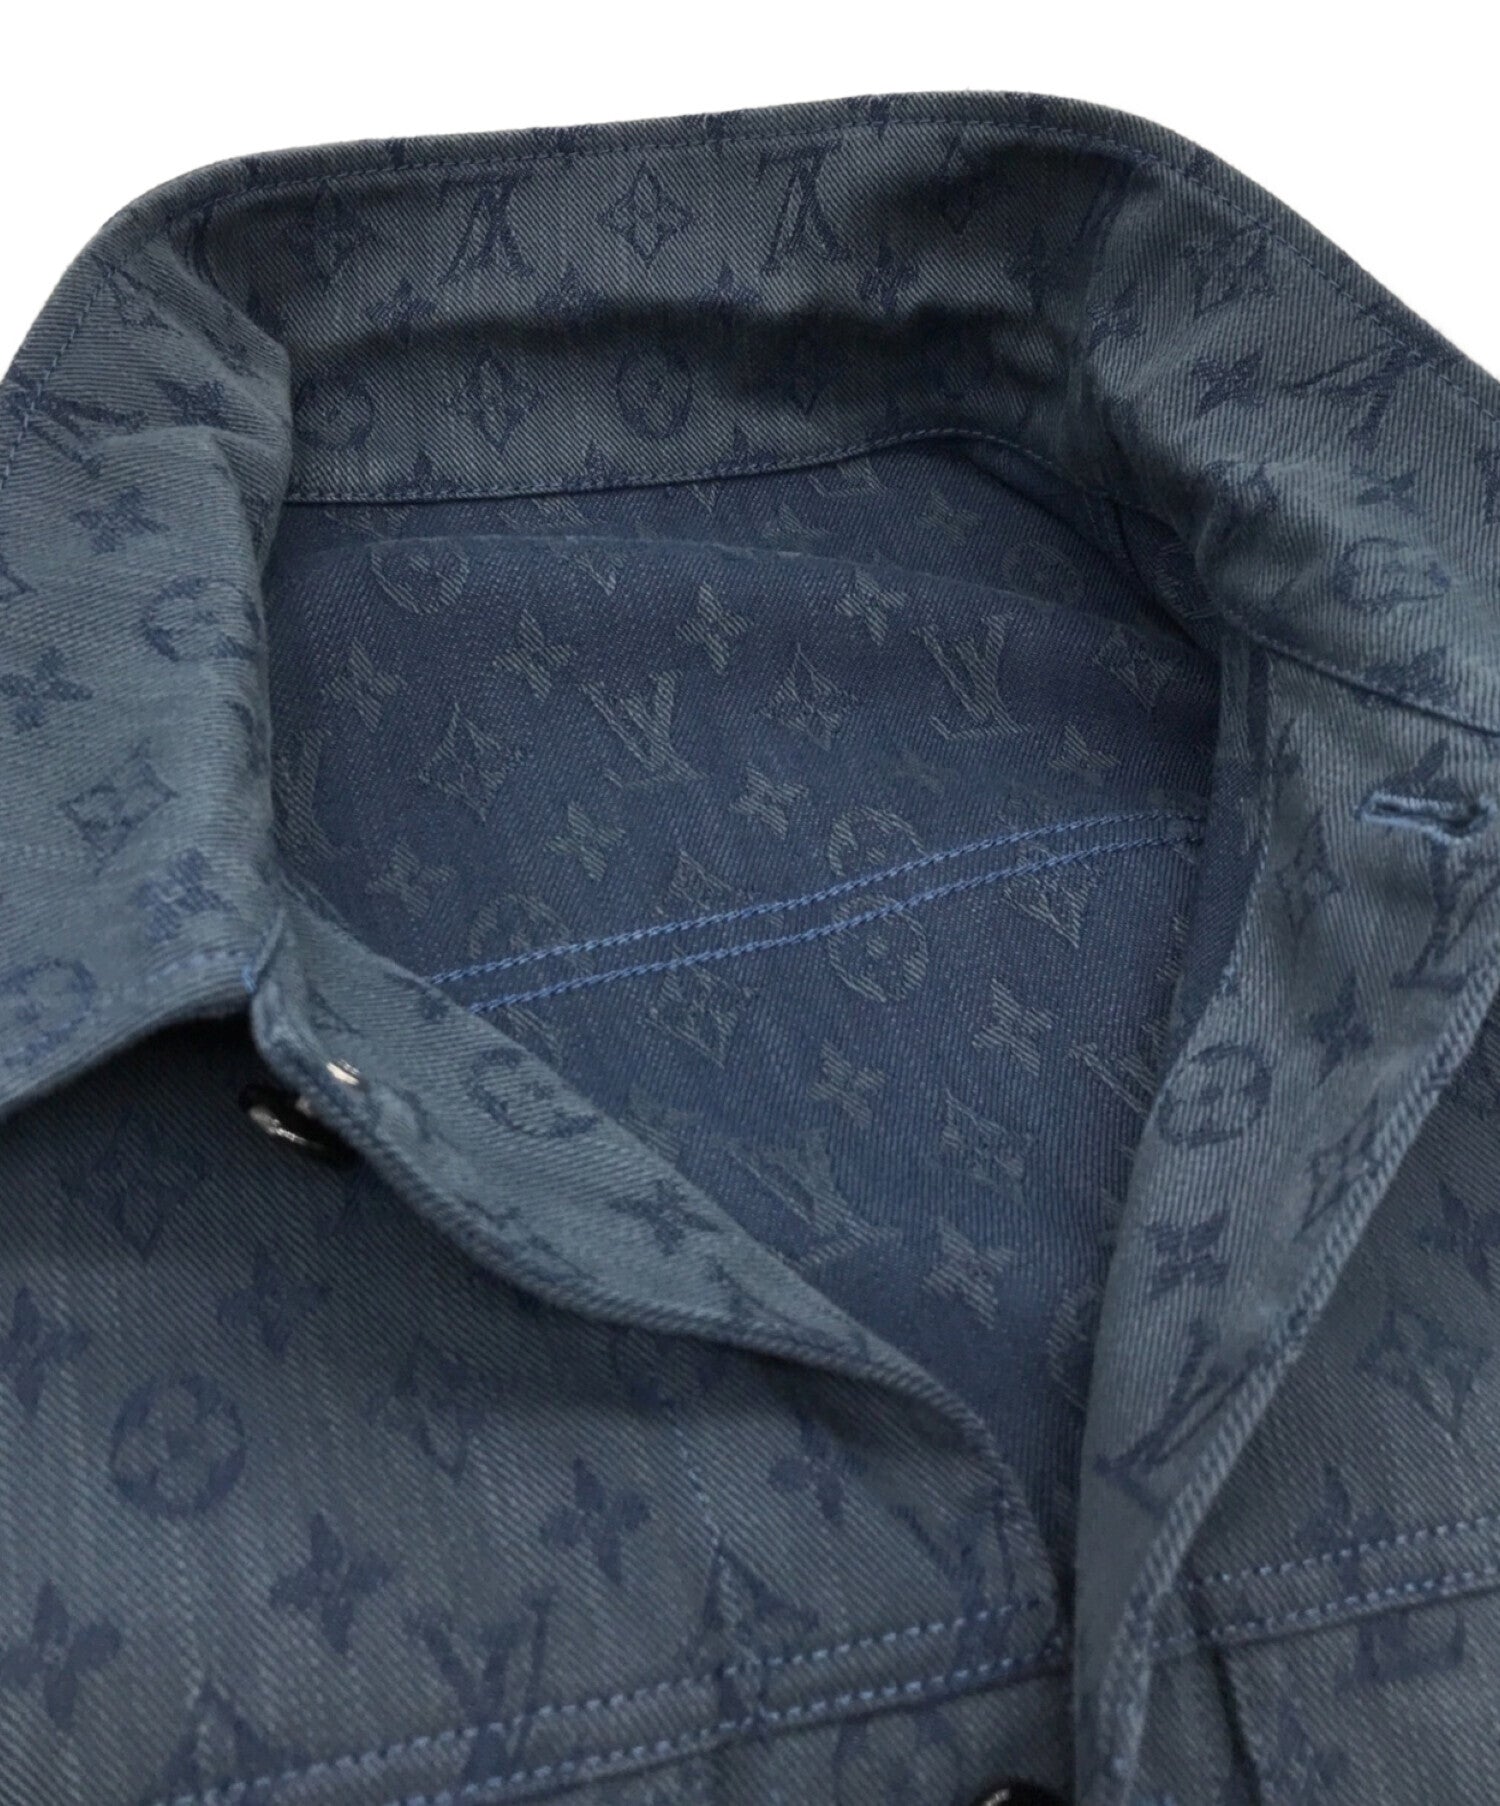 2019 fall/winter Louis Vuitton denim jacket  Denim jacket, Louis vuitton,  Clothes design